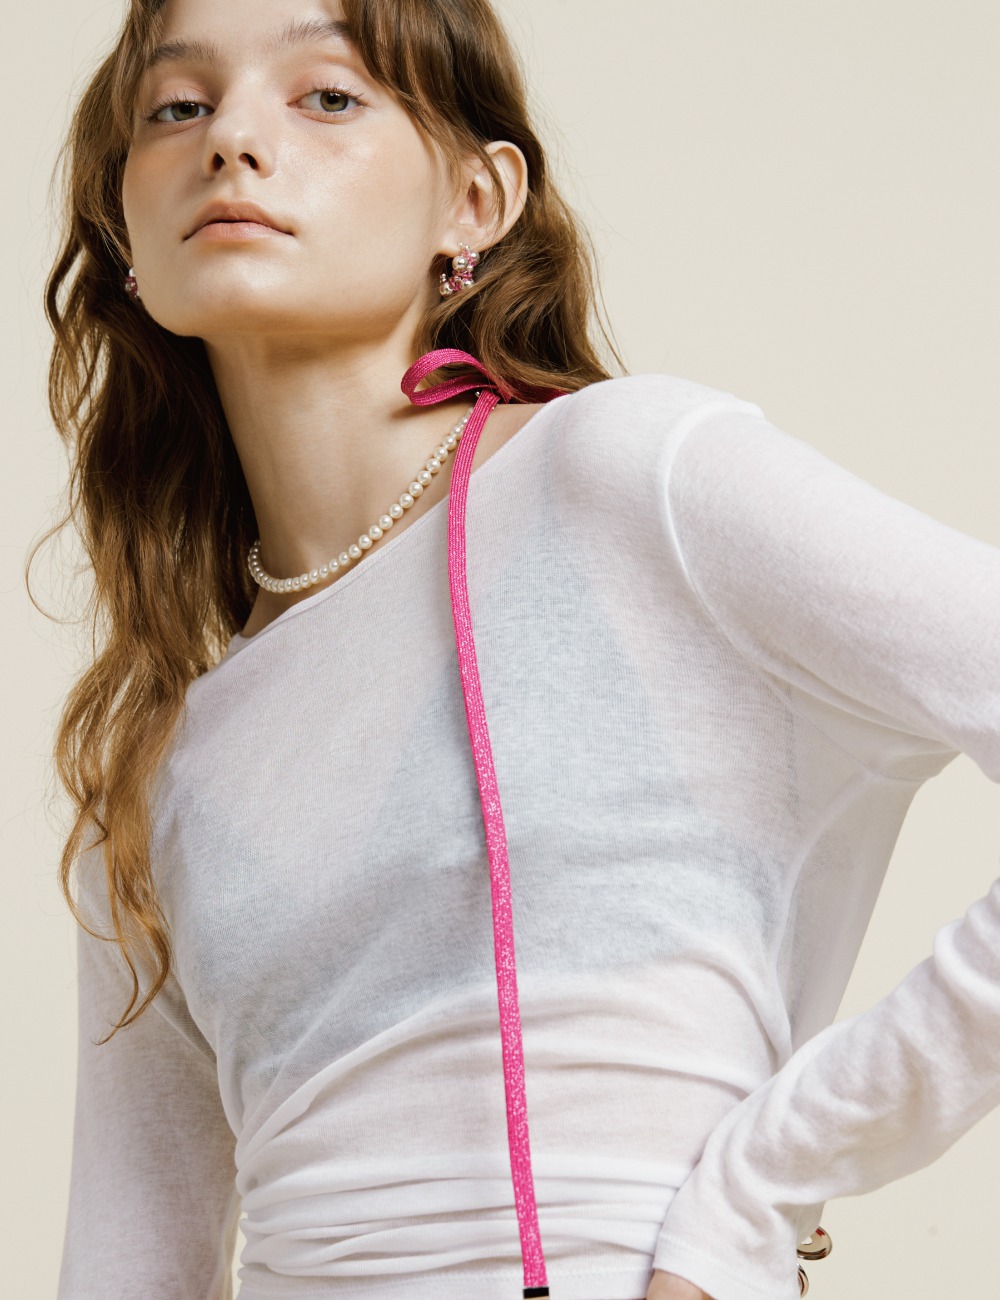 Glitter strap Necklace (Hot pink)